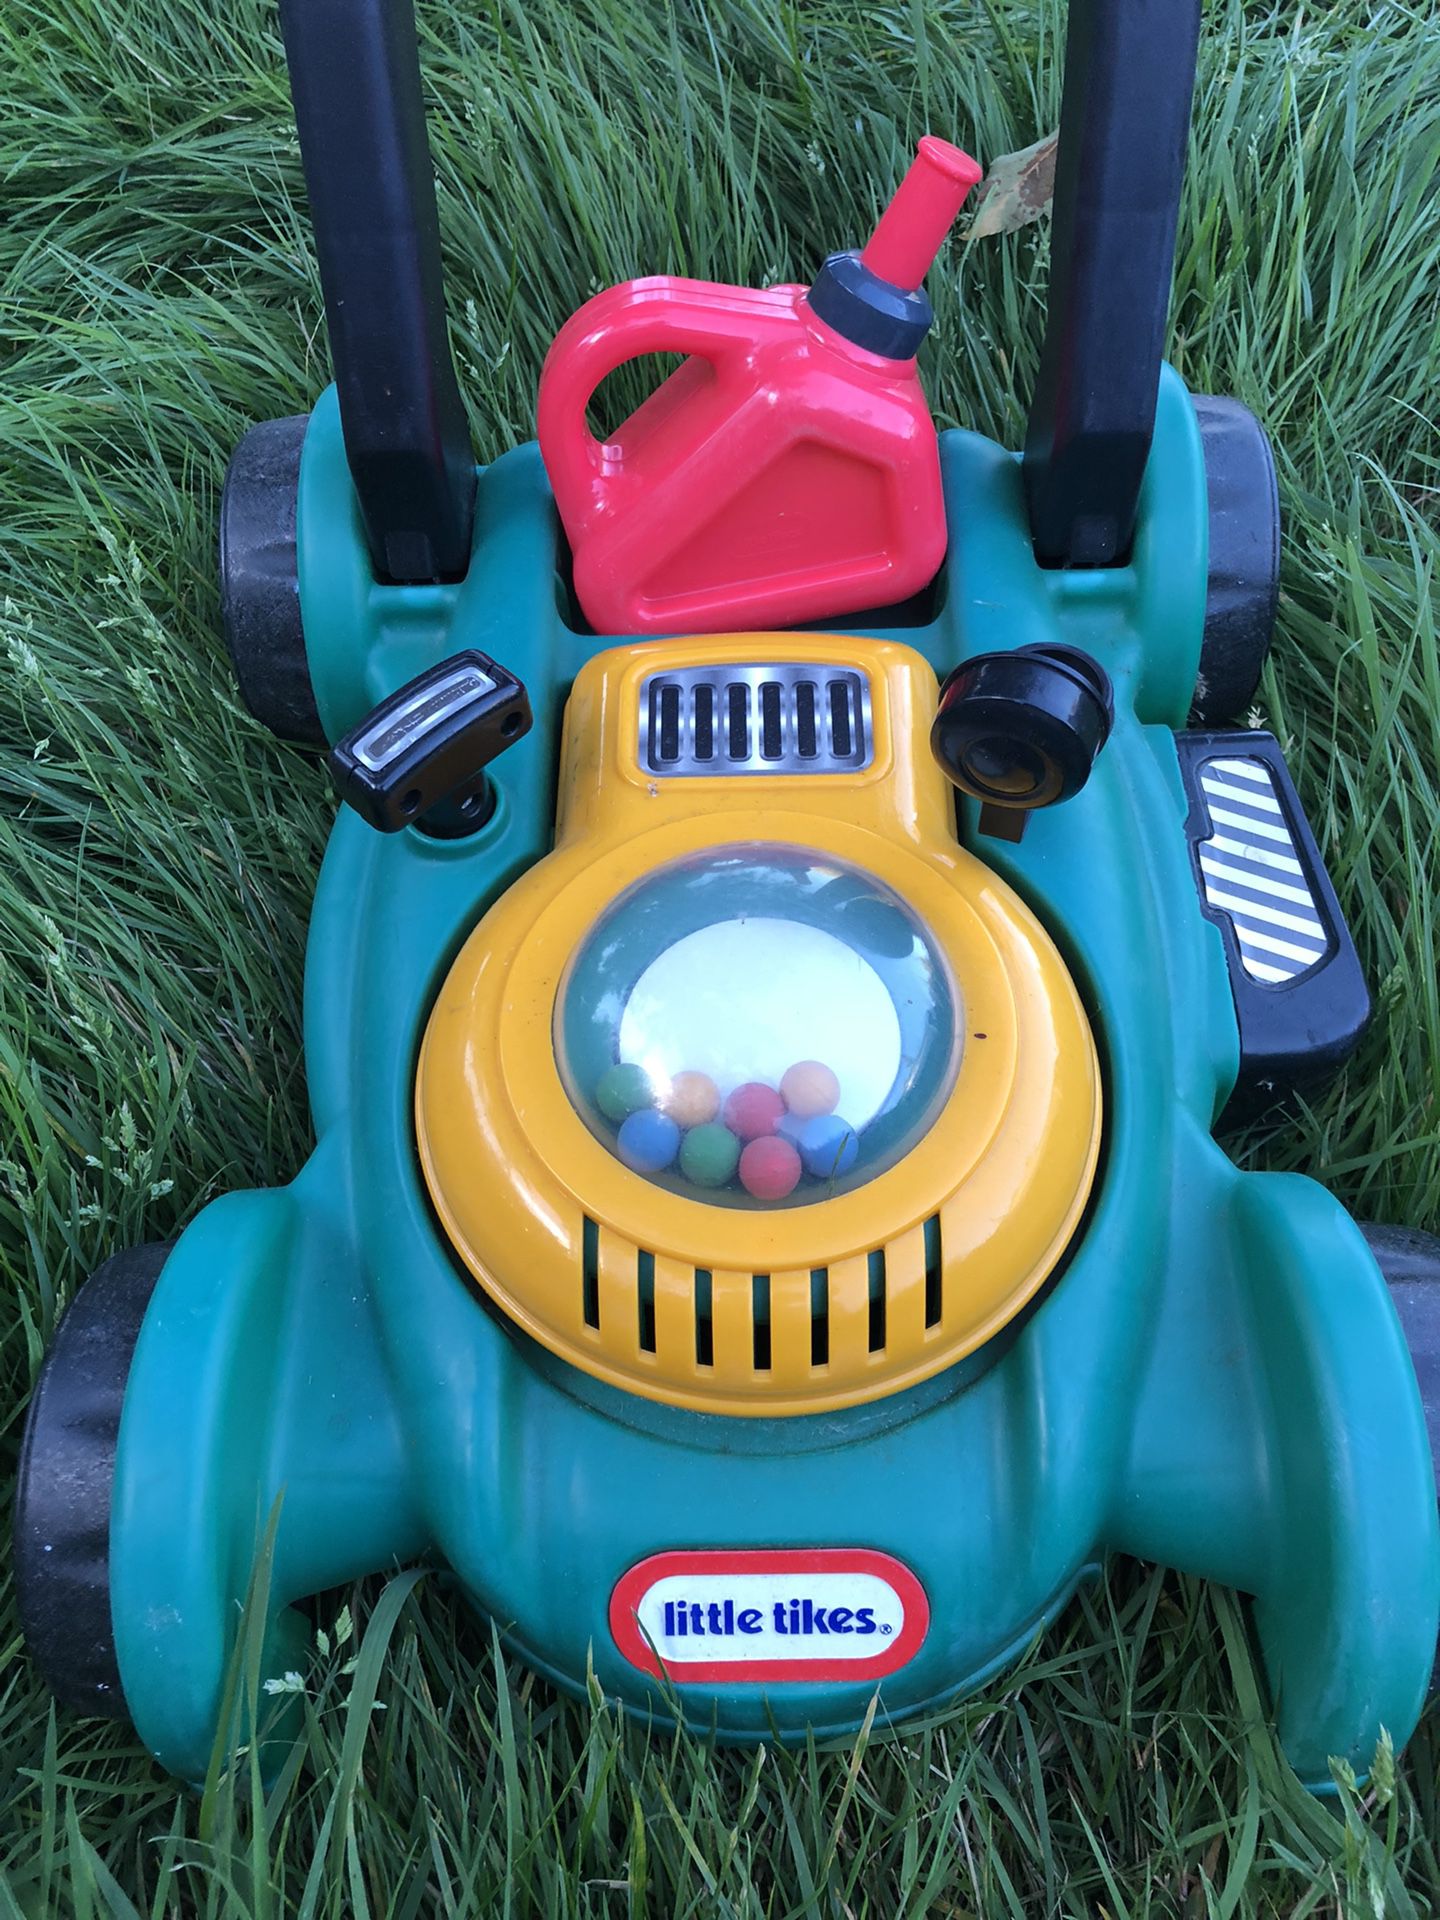 Little Tikes Lawn Mower